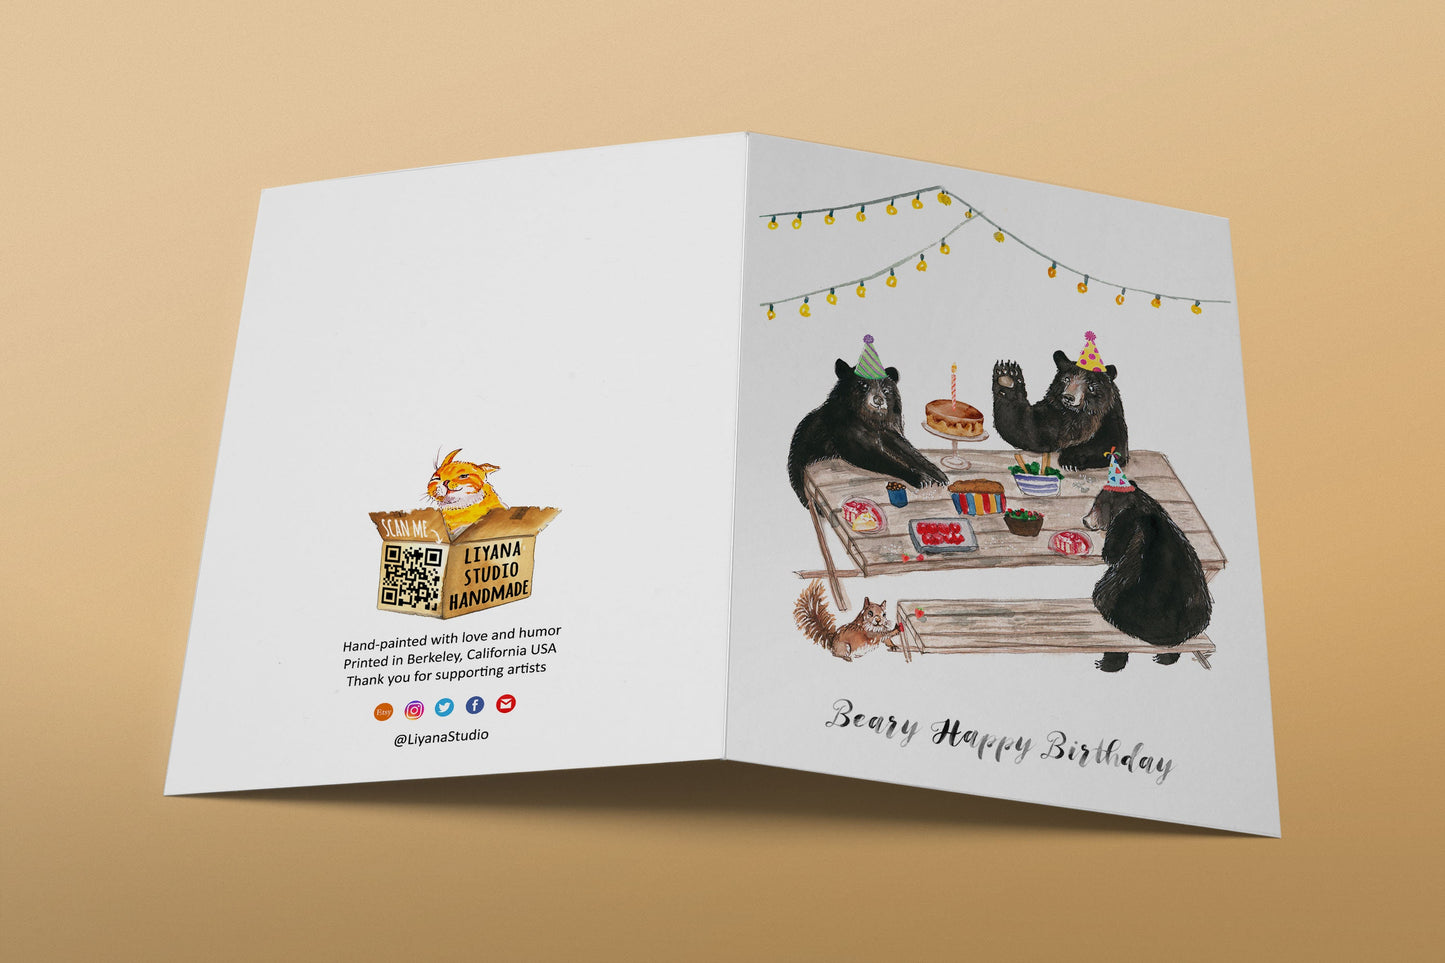 Black Bear Birthday Cards For Her - Picnic Kids Birthday Party Card - Whimsical Woodland Animals Birthday Card Funny - Liyana Studio